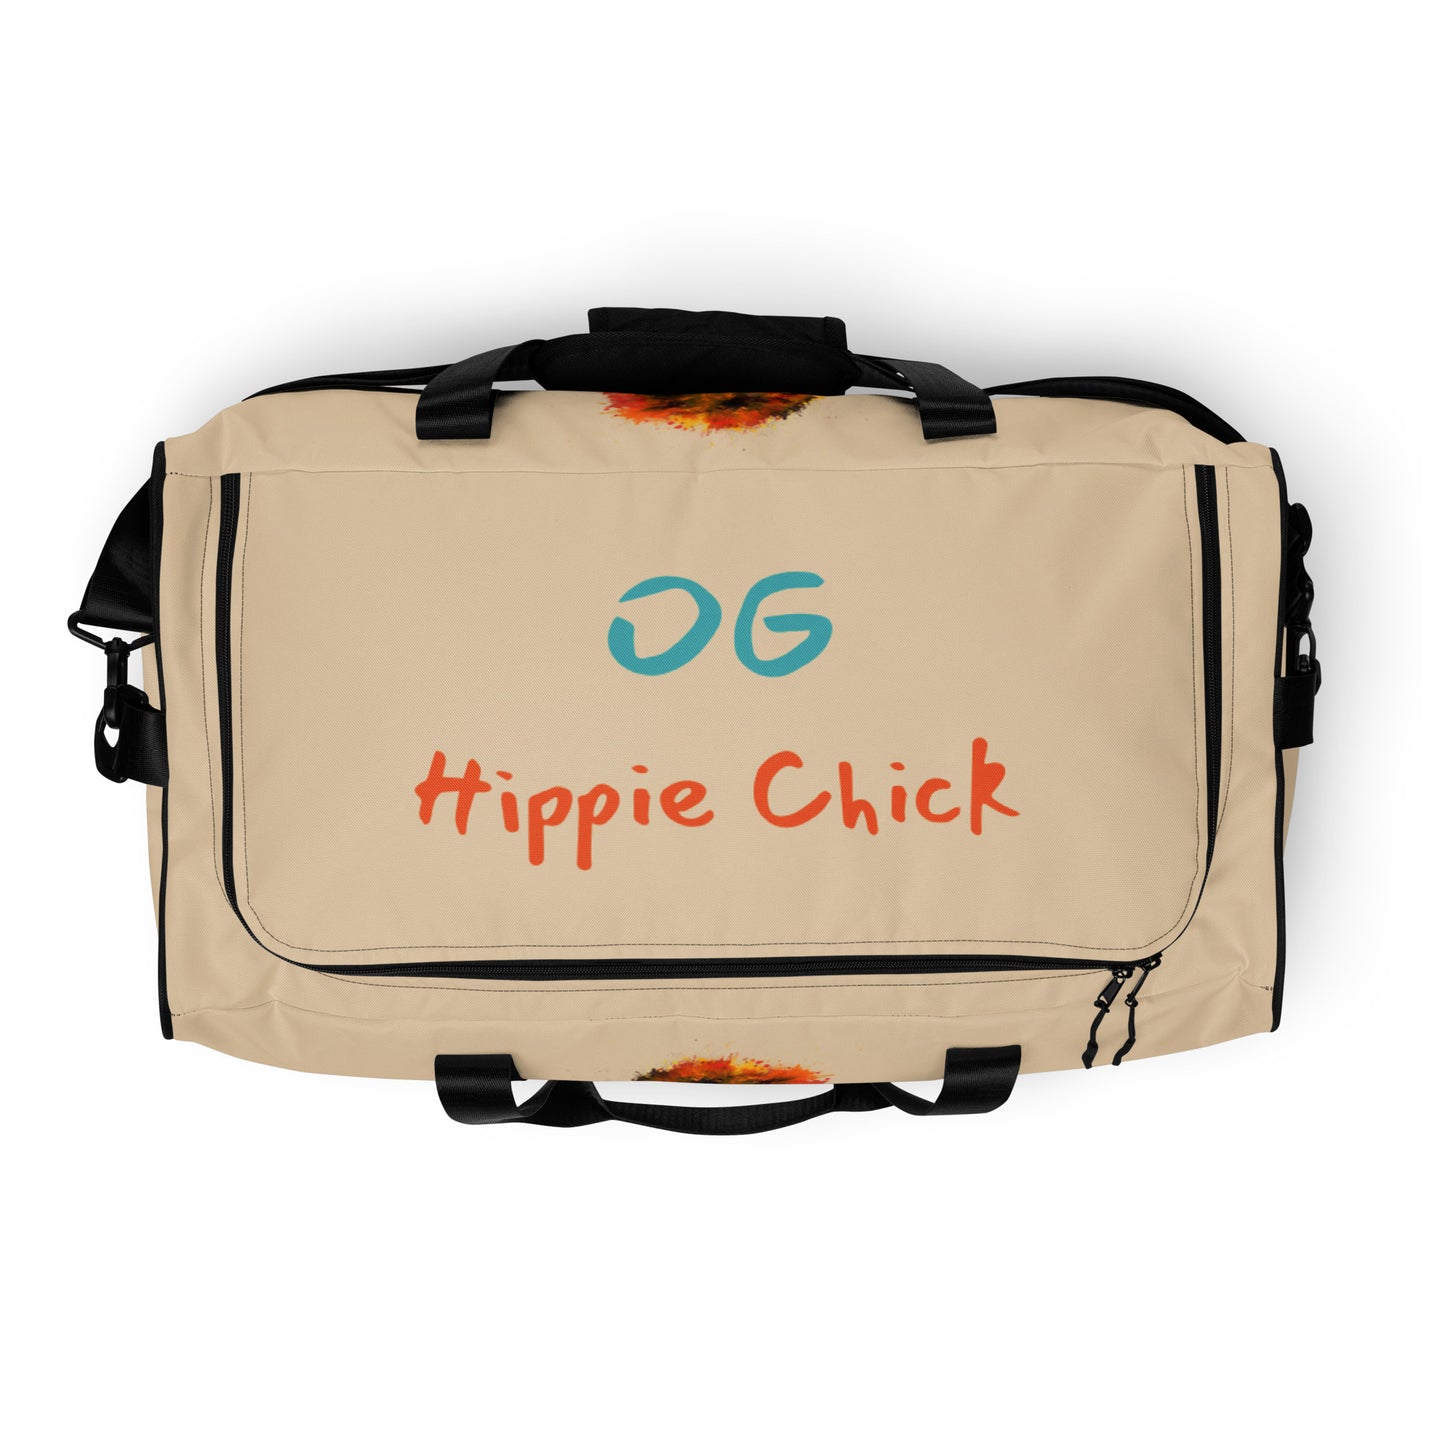 Beige Duffle Bag - OG Hippie Chick